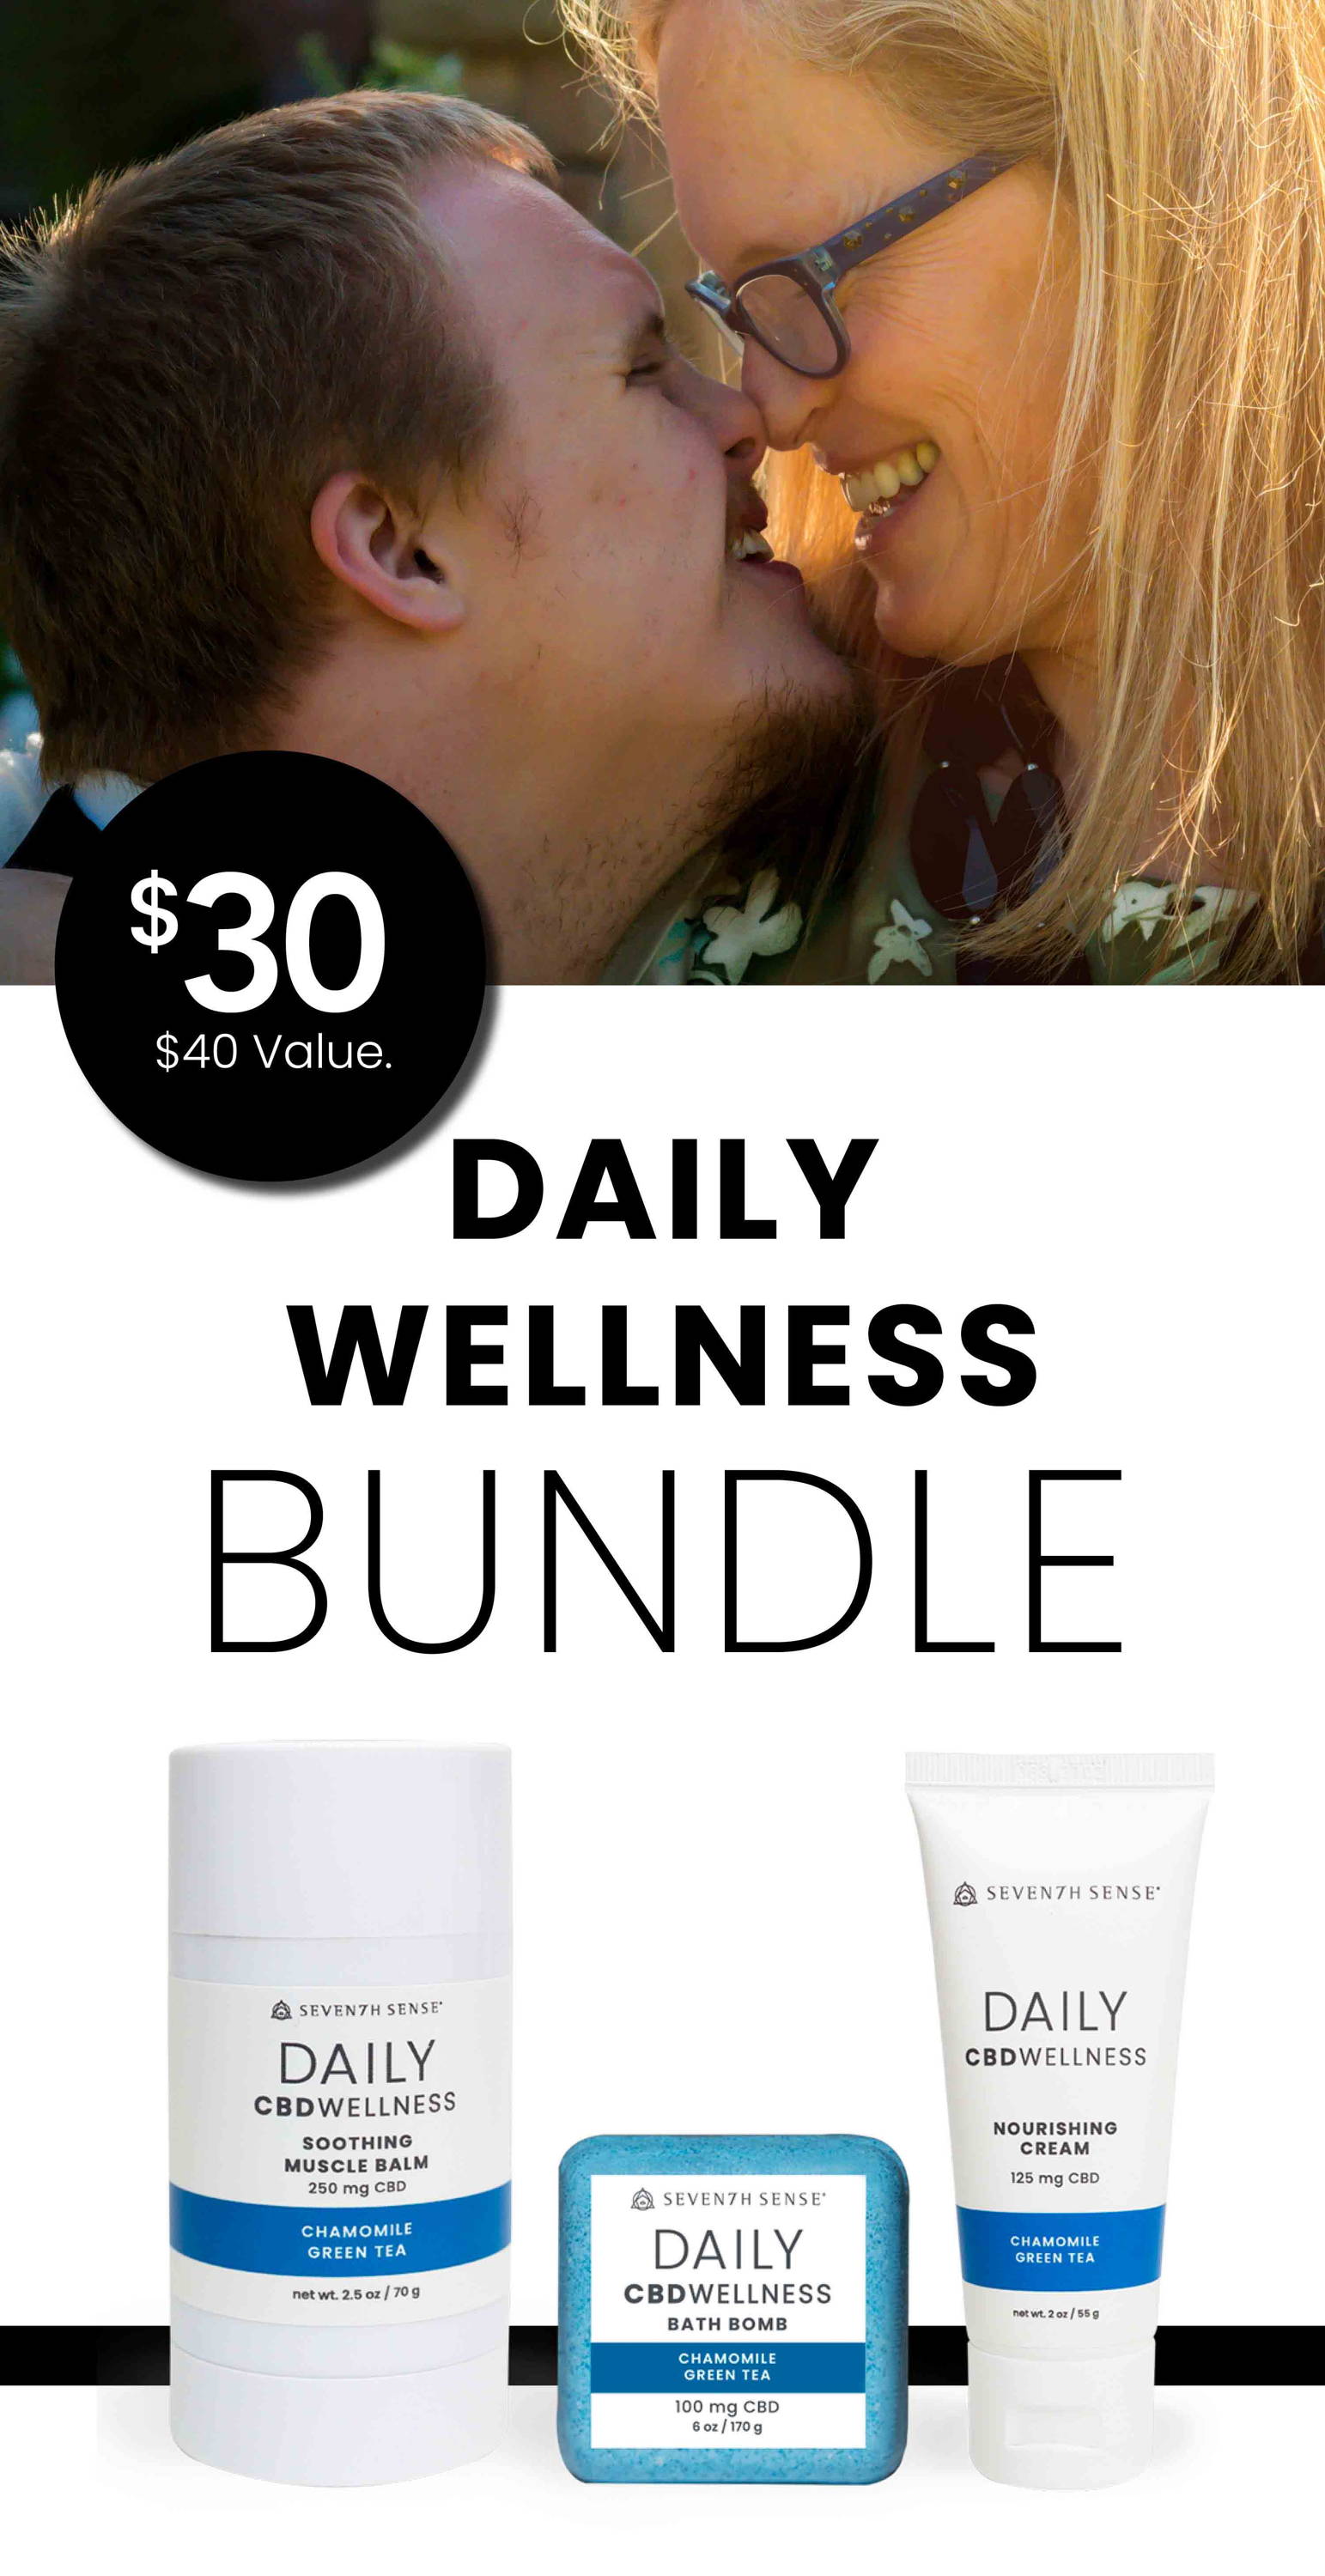 Daily Wellness Bundle $30. $40 Value.